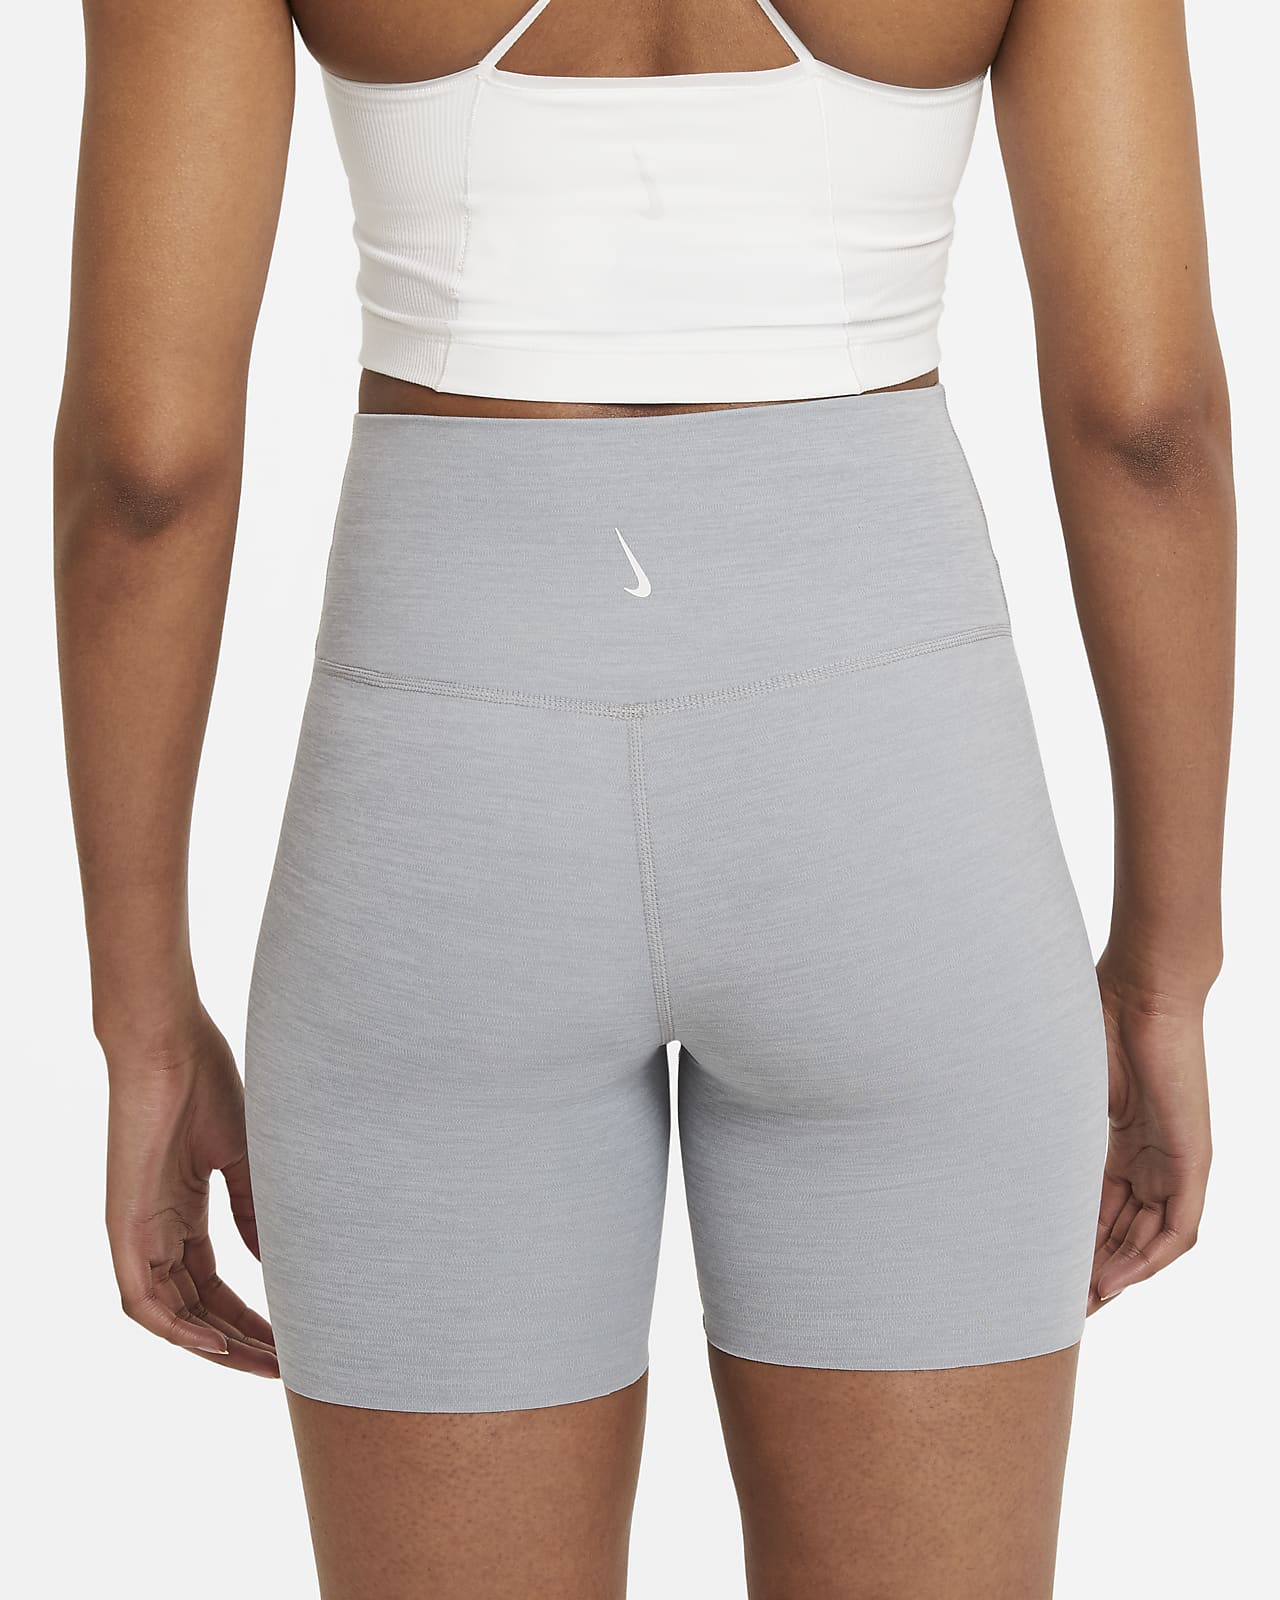 Nike Yoga Dri-FIT high rise legging booty shorts in black